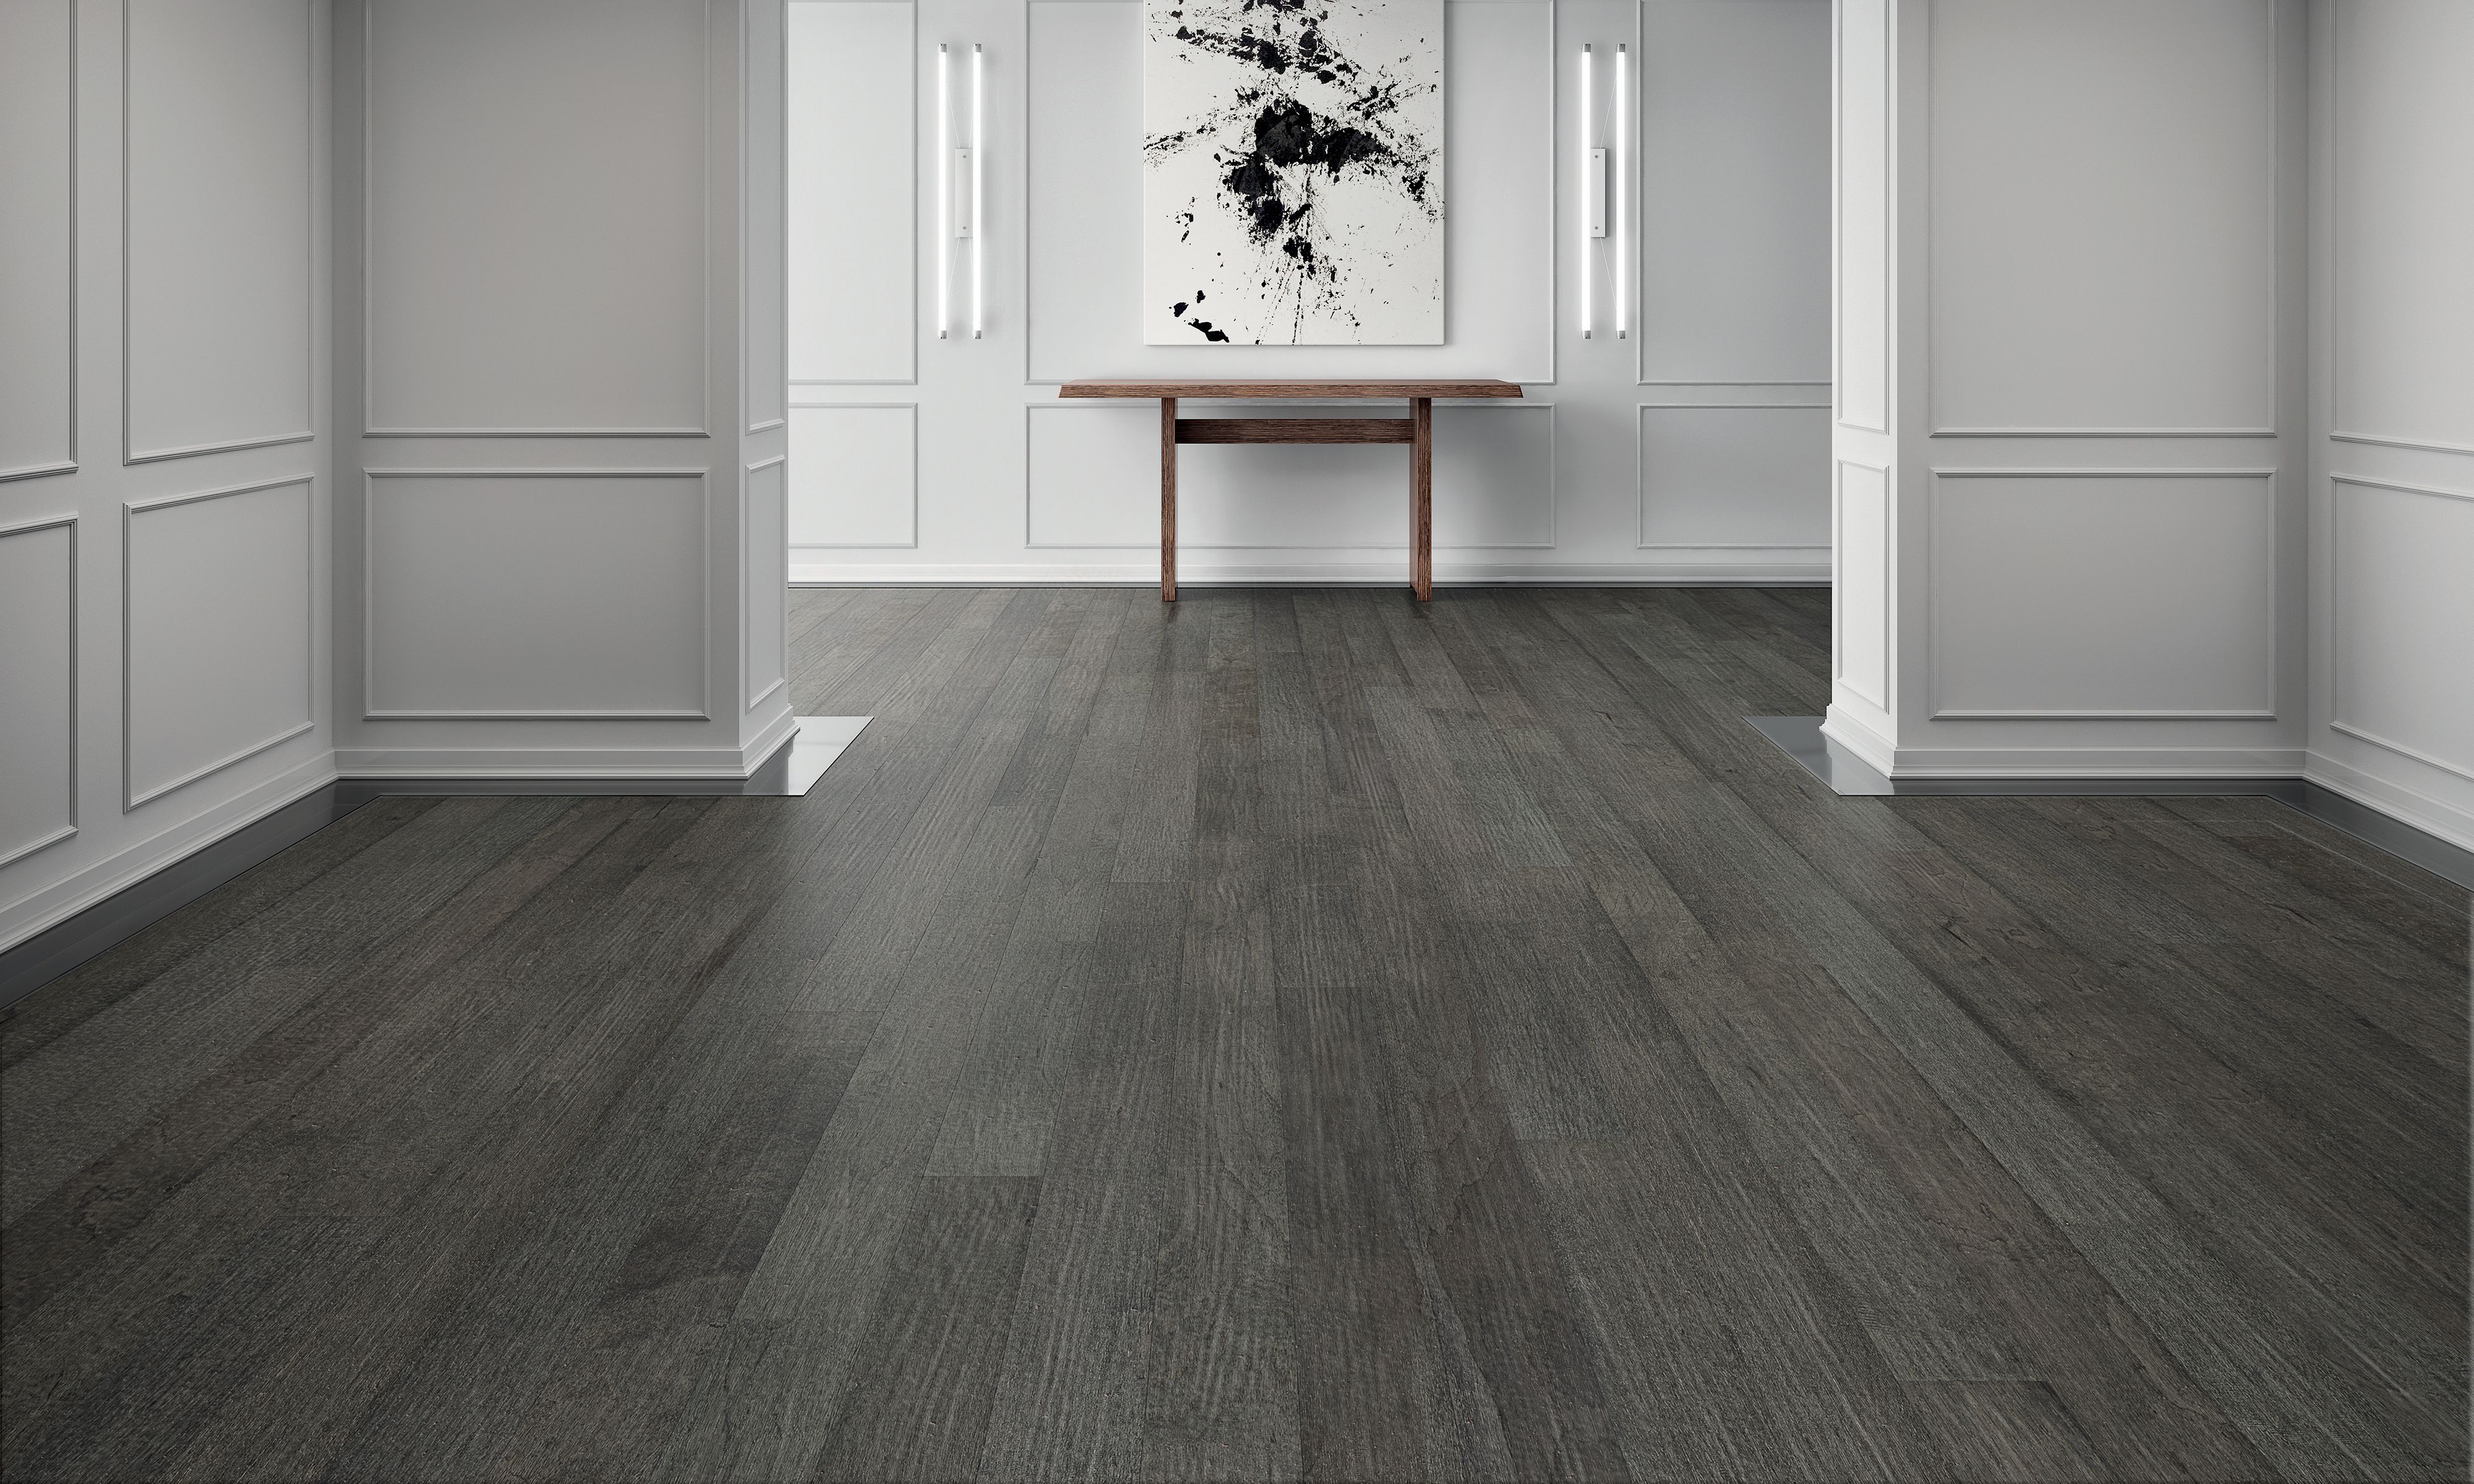 3. How to Keep Your Dark Grey Wood Floors Looking Great